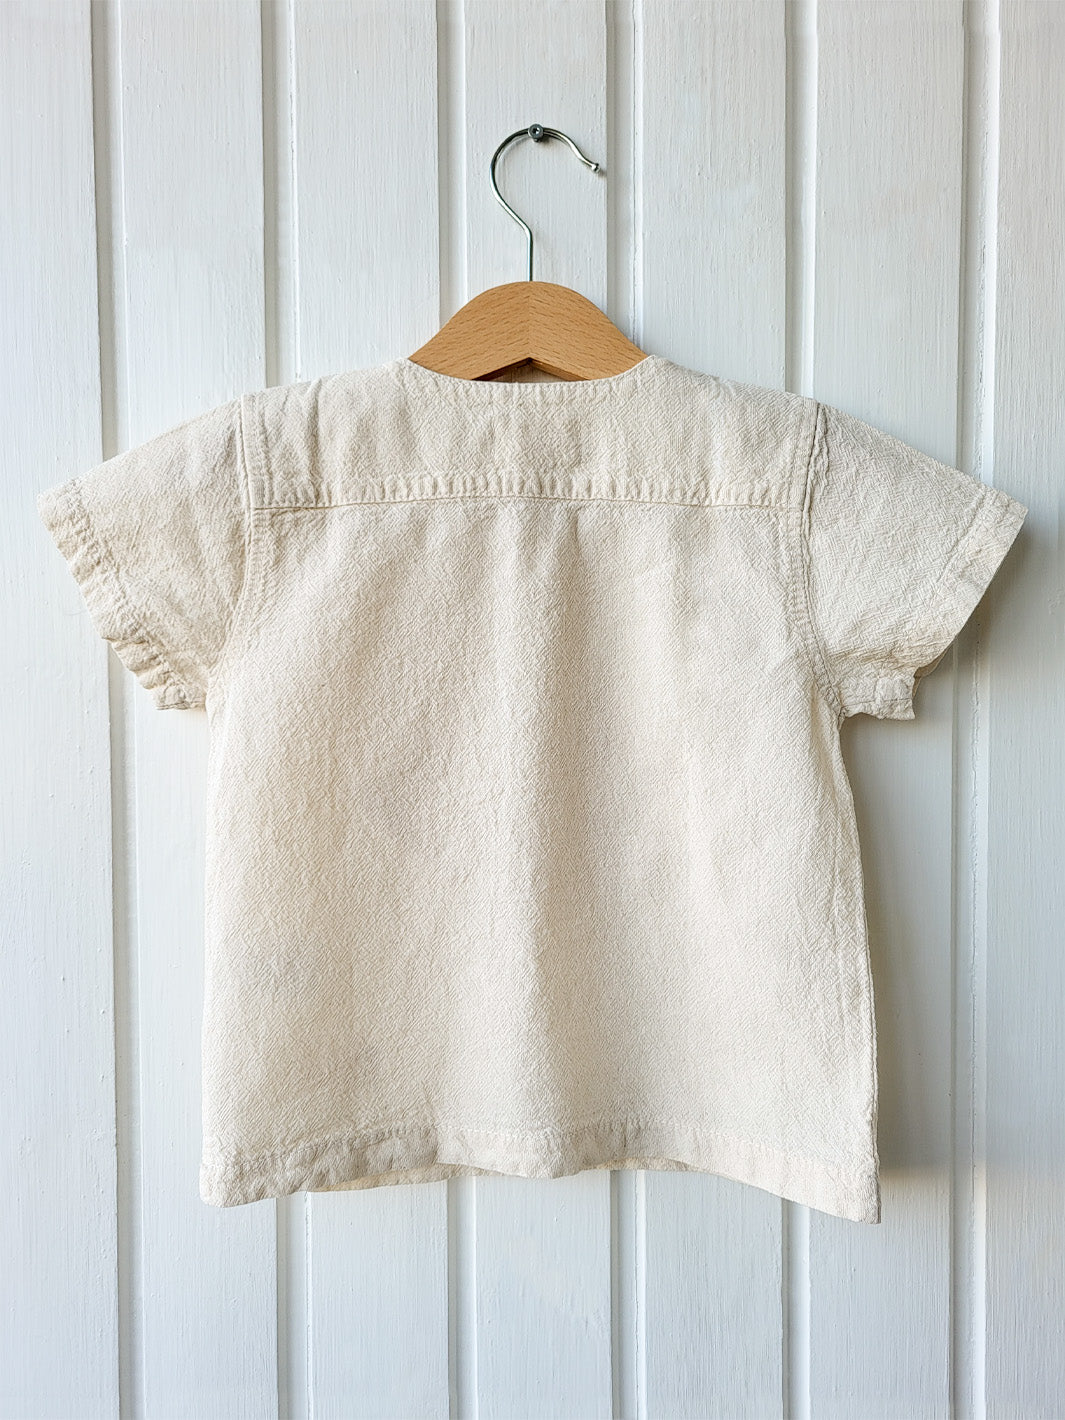 Dala T-shirt made of natural cotton, in cream, with beautifully embroidered symbolic horse | Pojken och flickan tröja